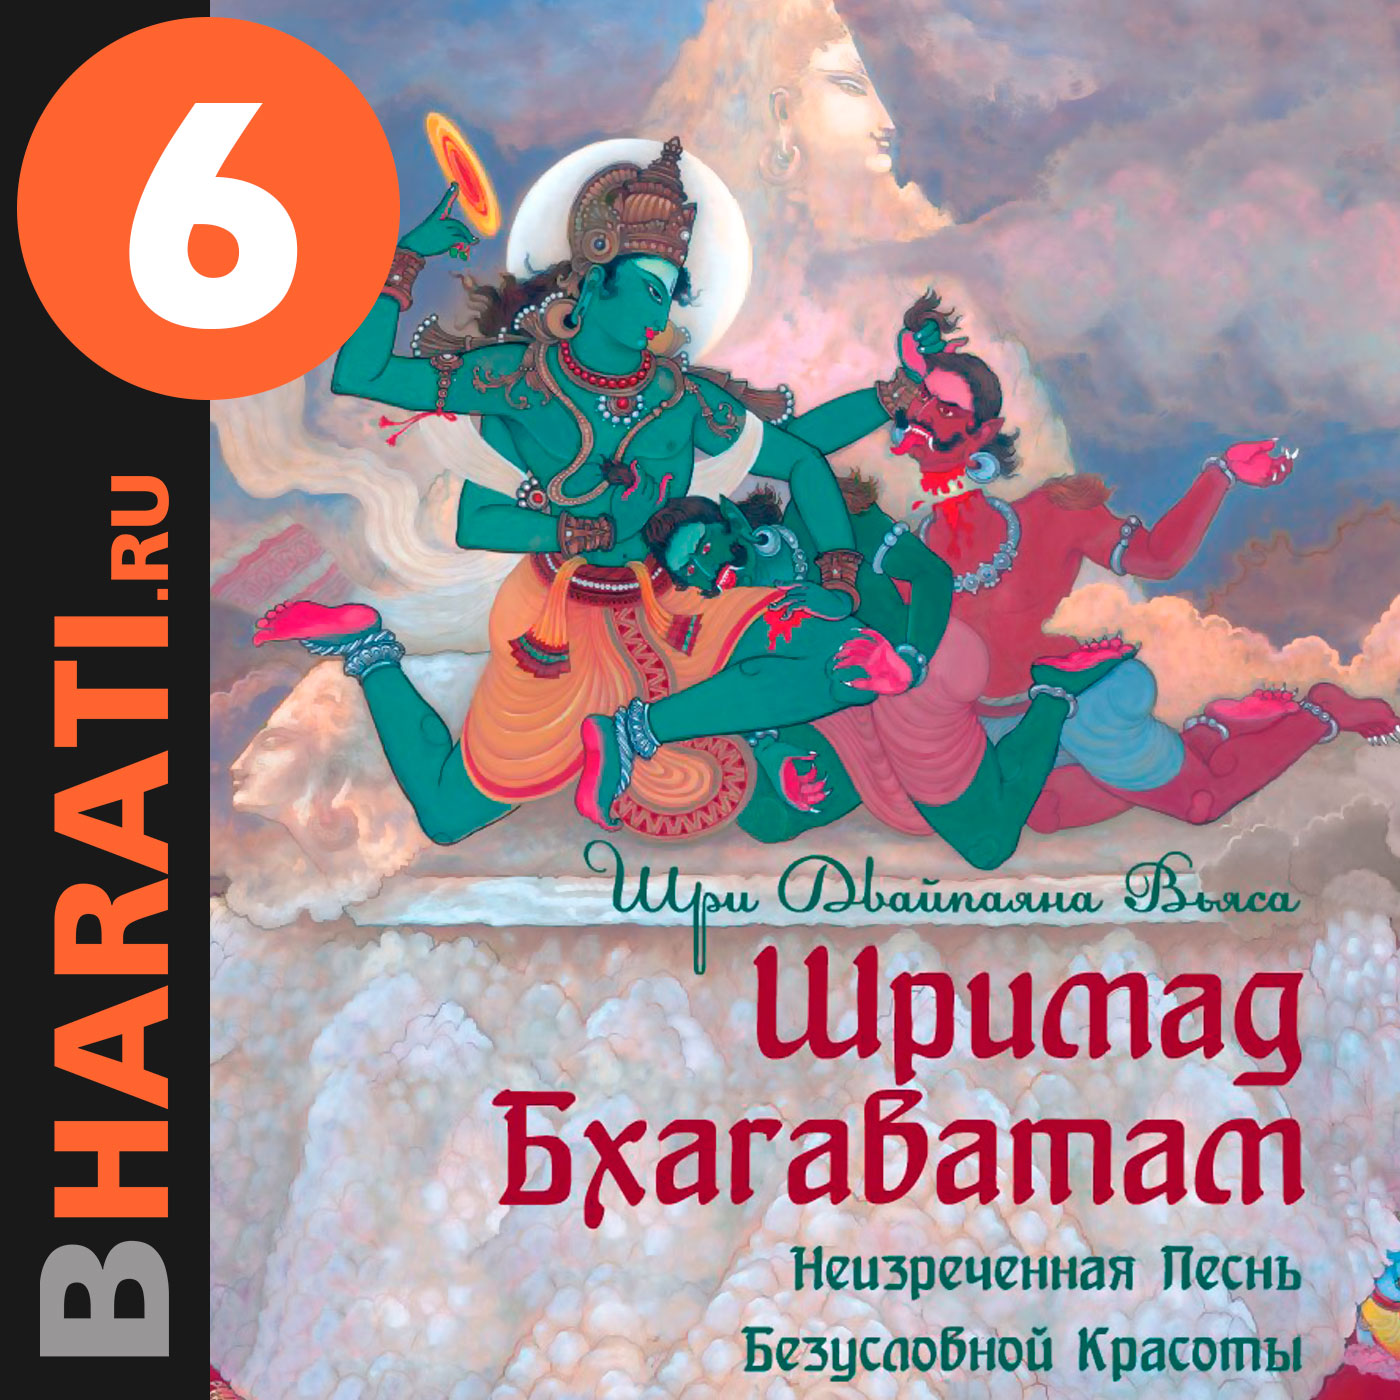 Аудиокнига "Шримад Бхагаватам". Книга 6: "Первозаконие"